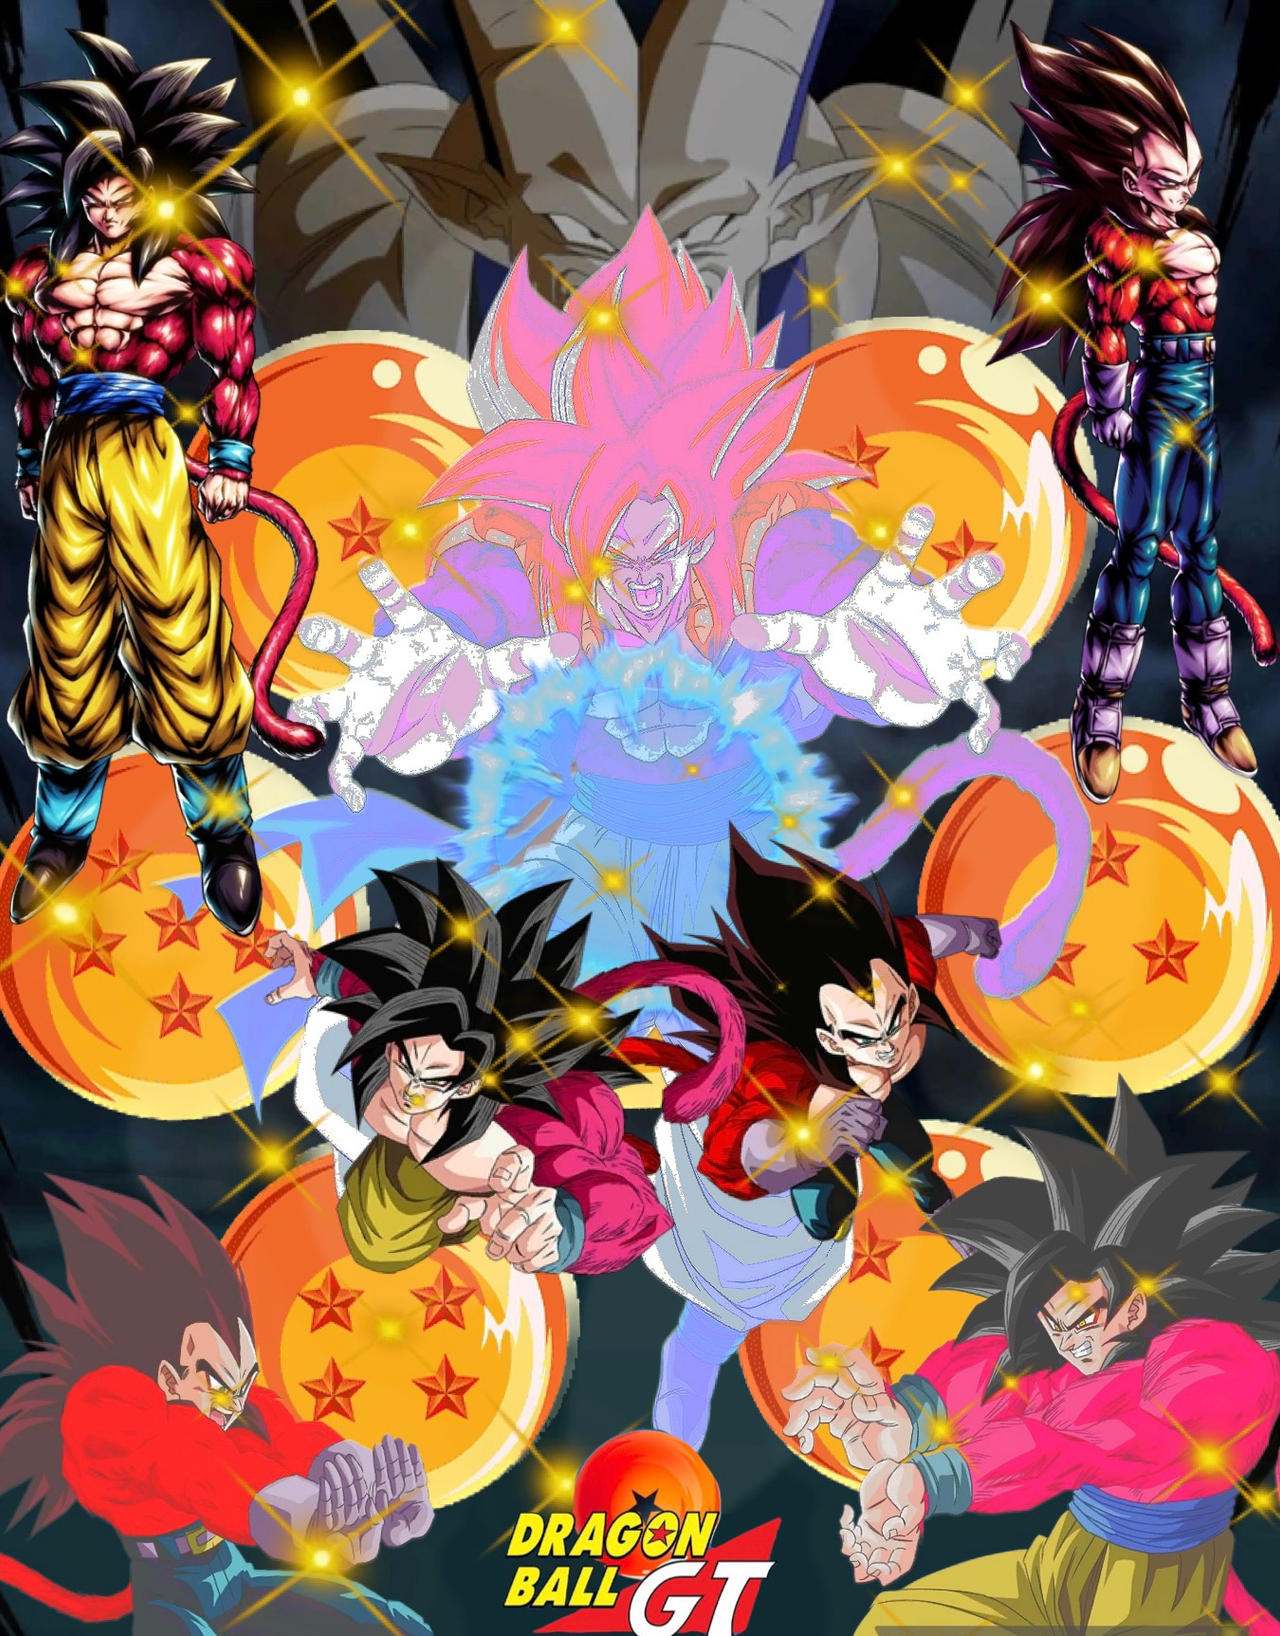 Dragon Ball Gt wallpaper by Micarlo2009 on DeviantArt